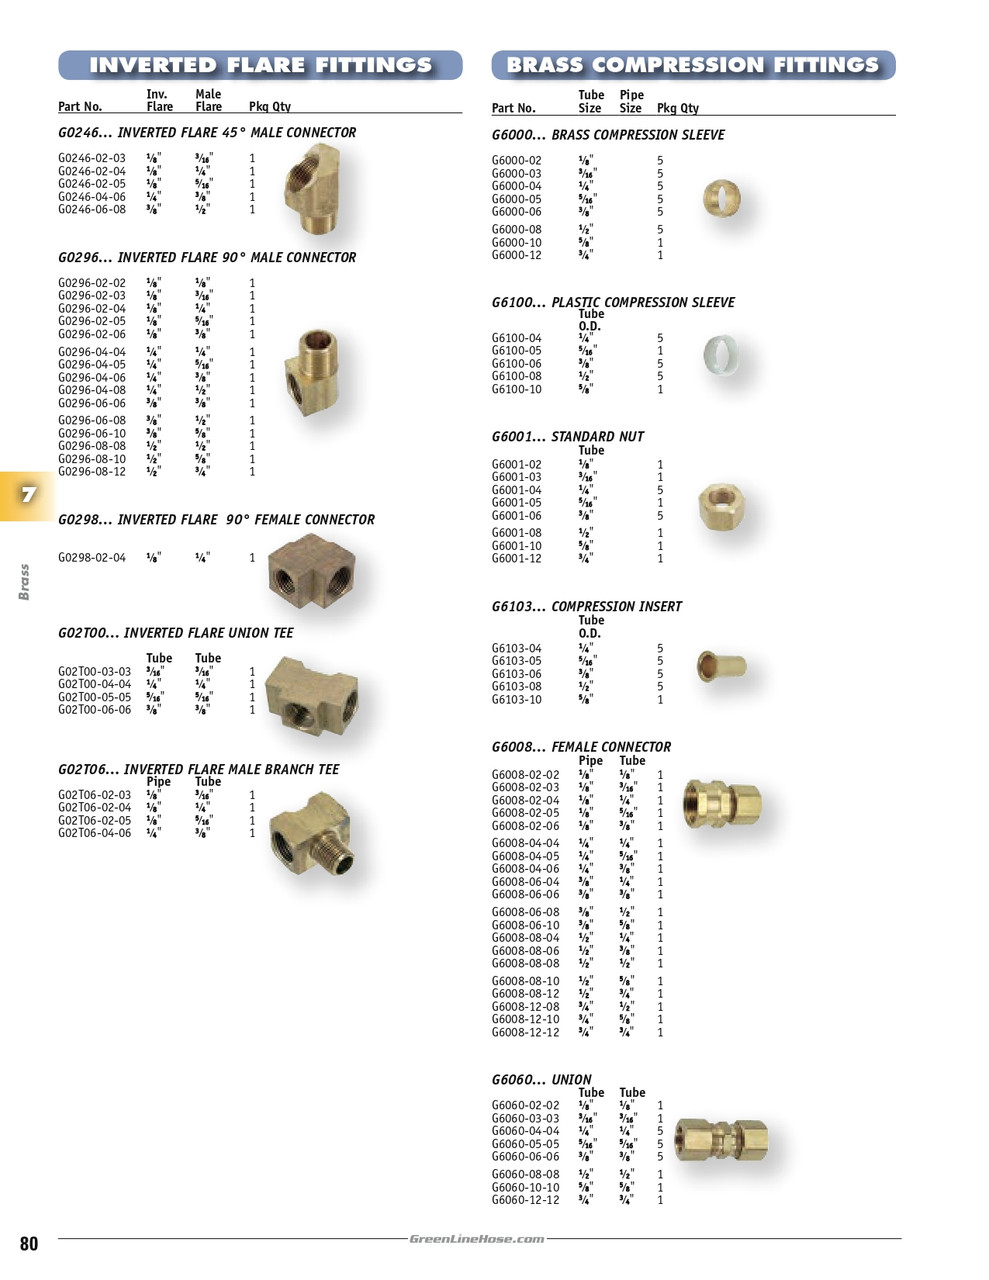 3/8" Brass Compression Union   G6060-06-06